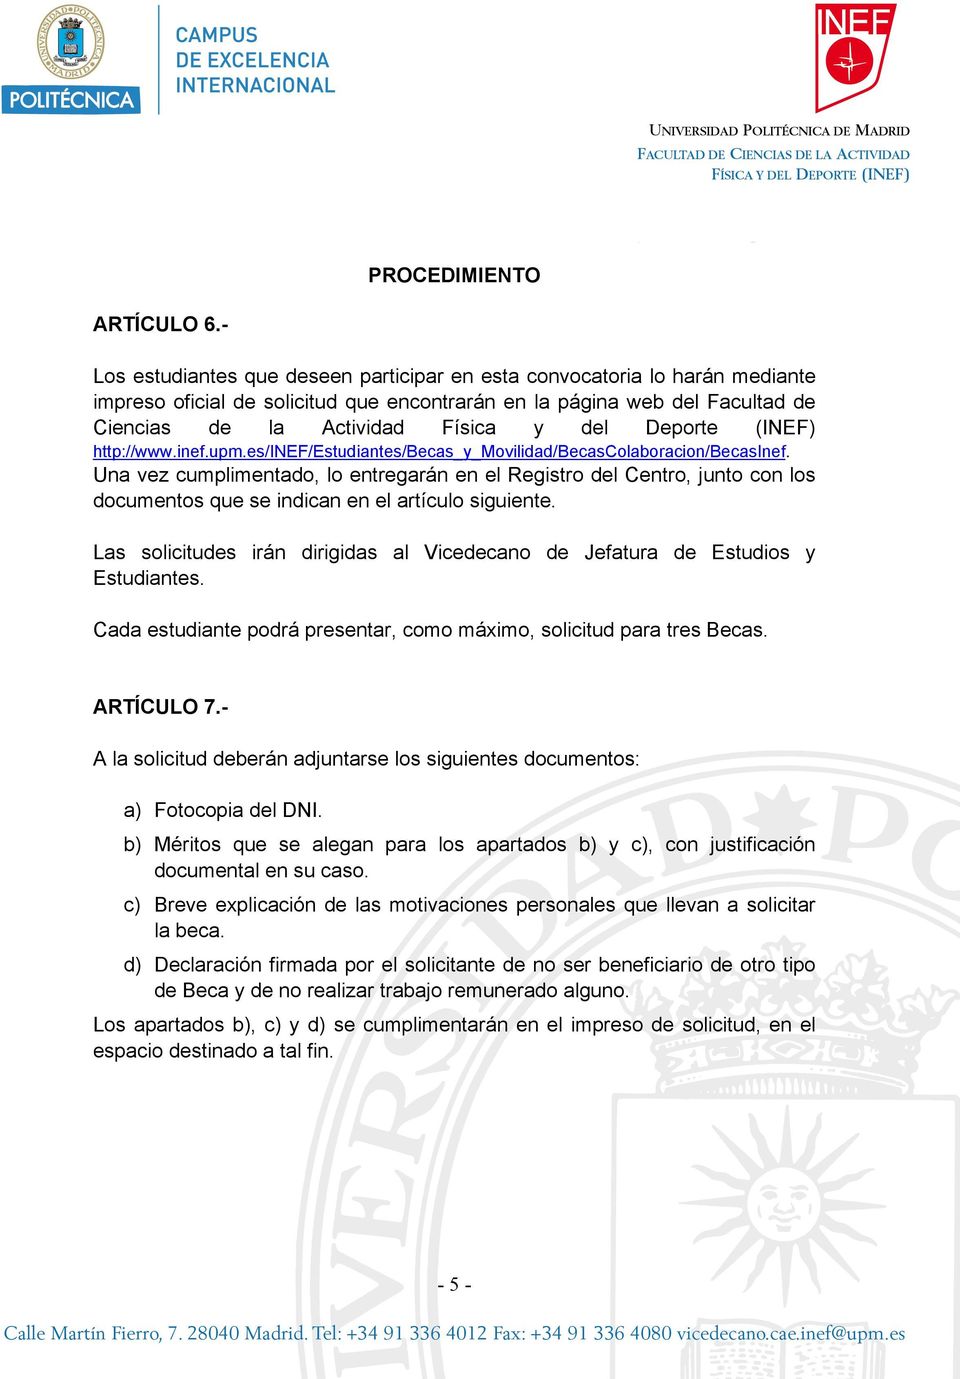 Deporte (INEF) http://www.inef.upm.es/inef/estudiantes/becas_y_movilidad/becascolaboracion/becasinef.